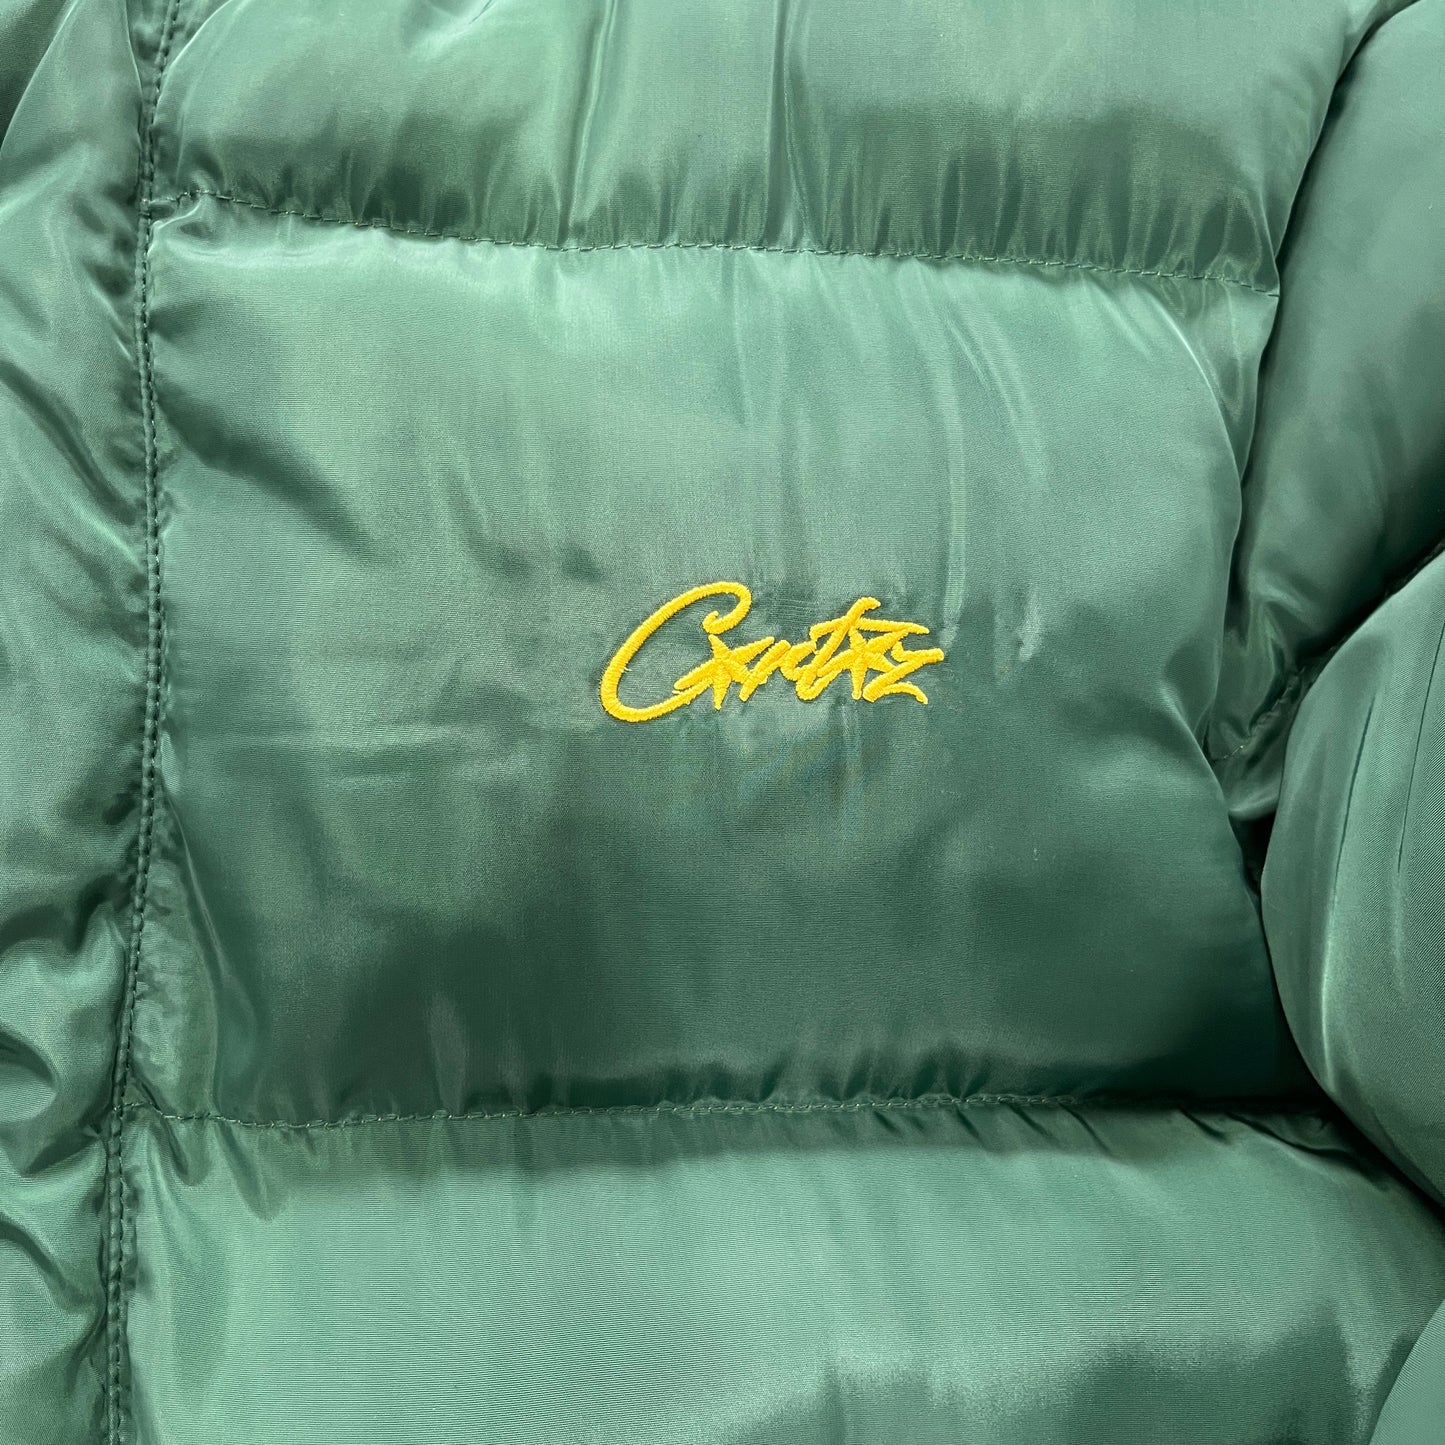 Corteiz Bolo Puffer Jacket - Emerald